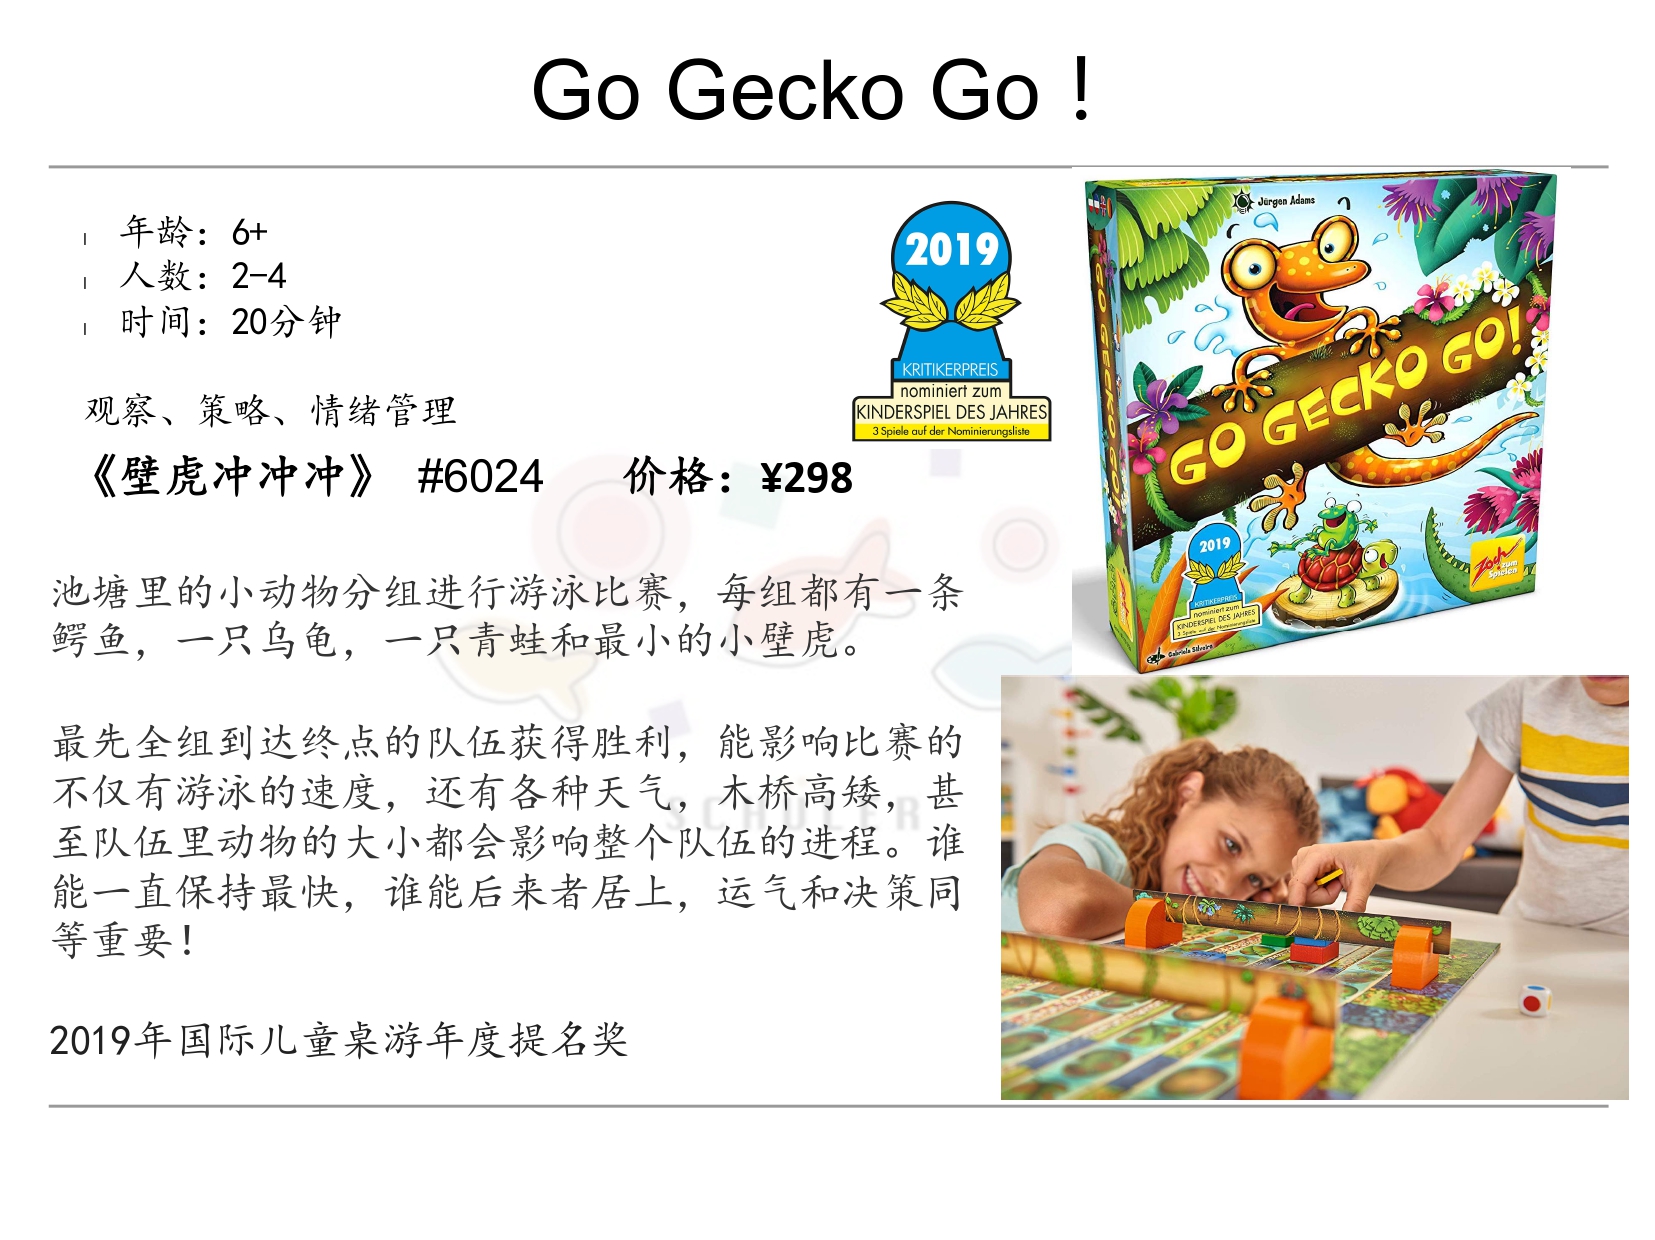 Go Gecko Go! 壁虎冲冲冲